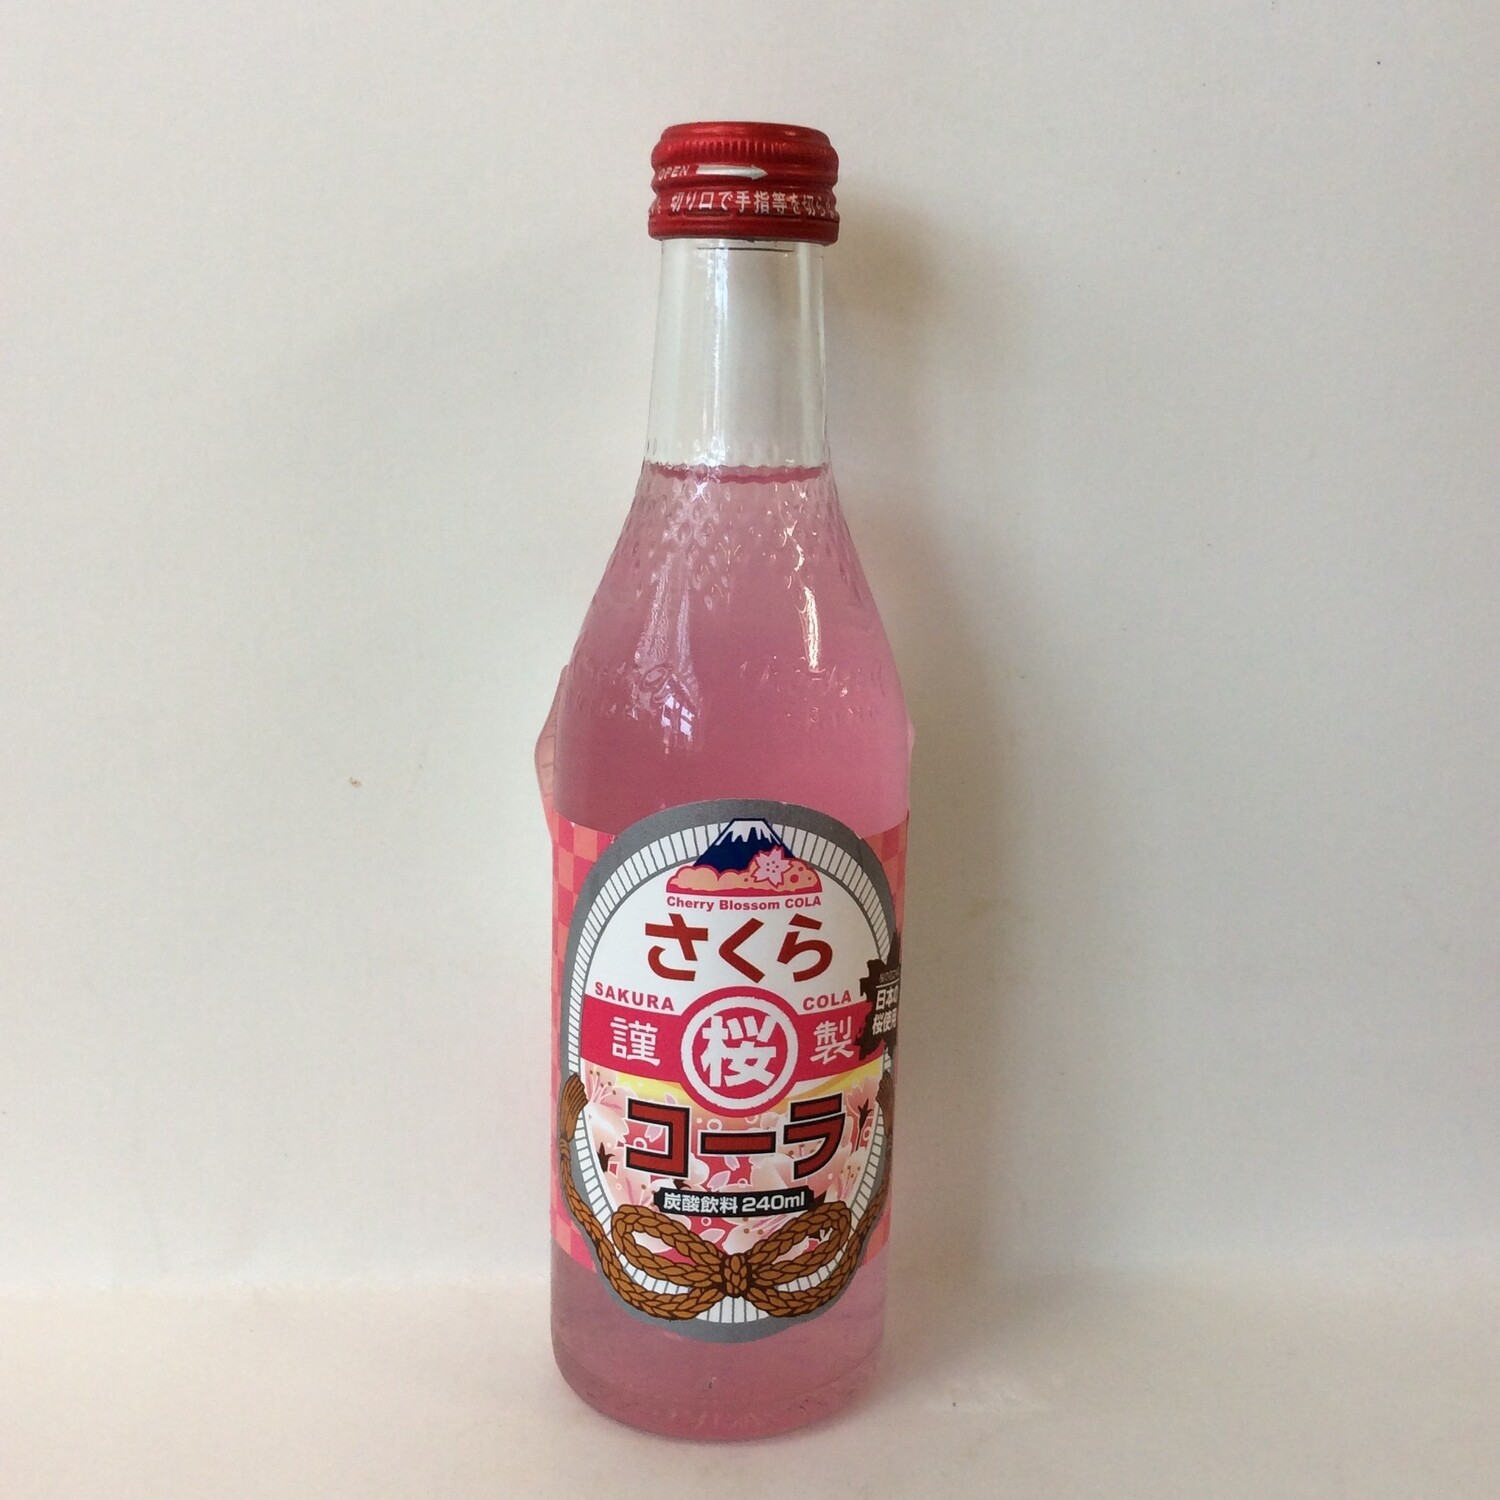 Kimura Sakura Cola 240ml